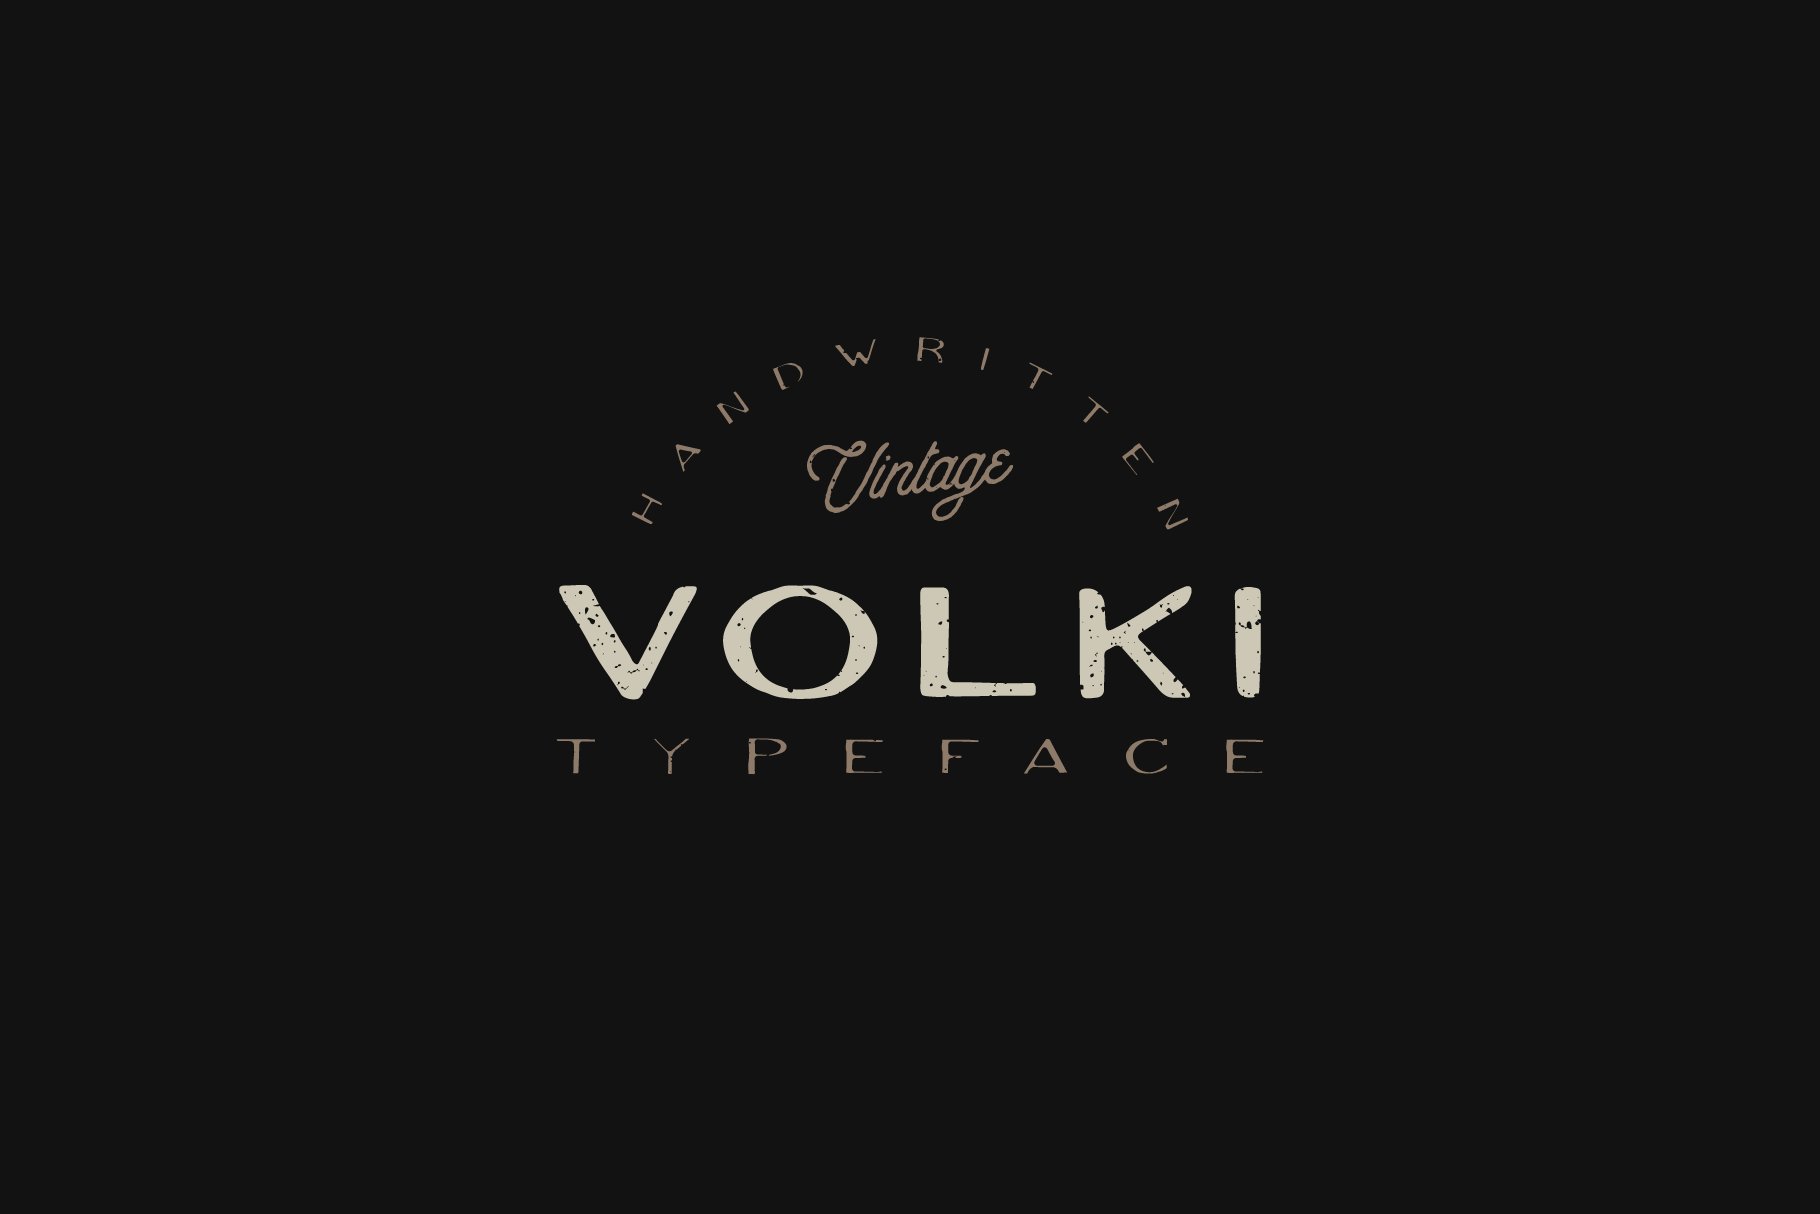 VOLKI - Vintage Handwritten Typeface cover image.